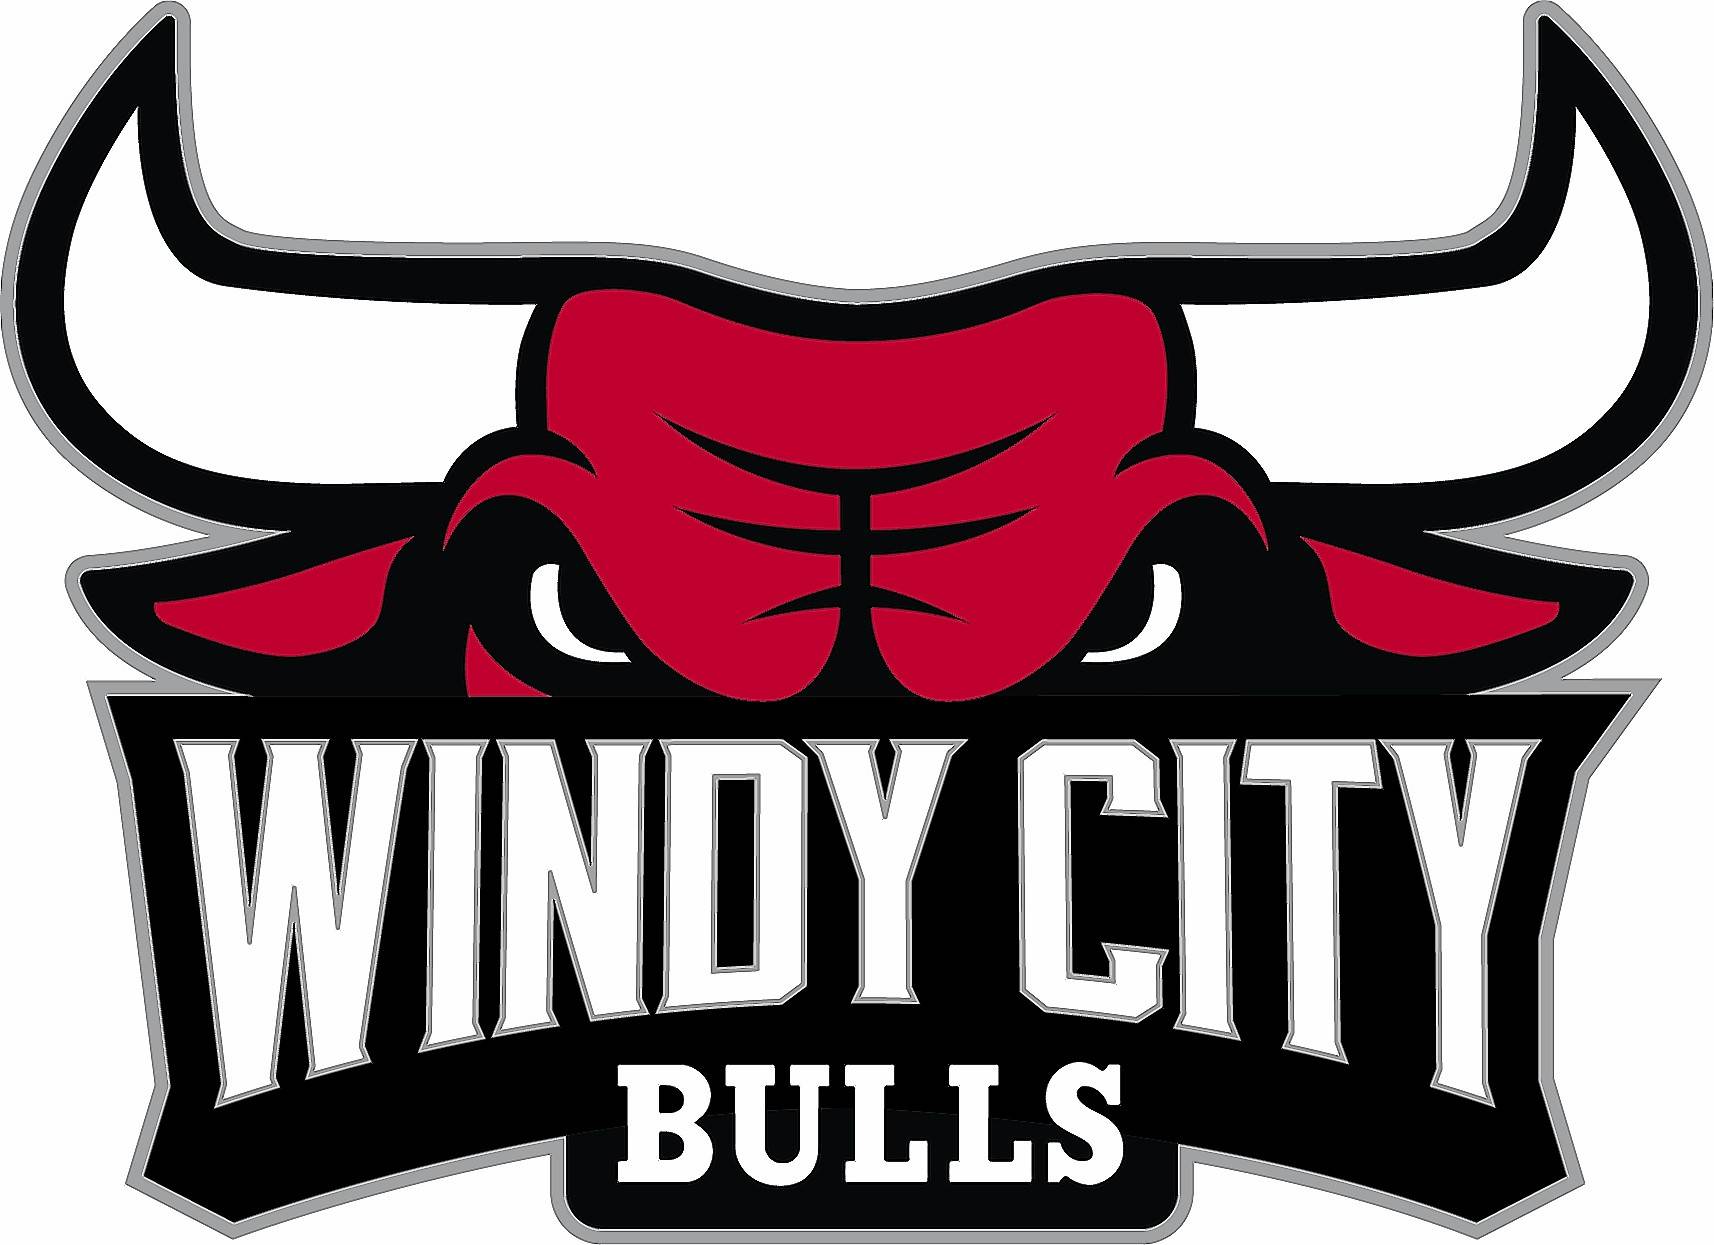 Chicago Bulls Vector at GetDrawings Free download